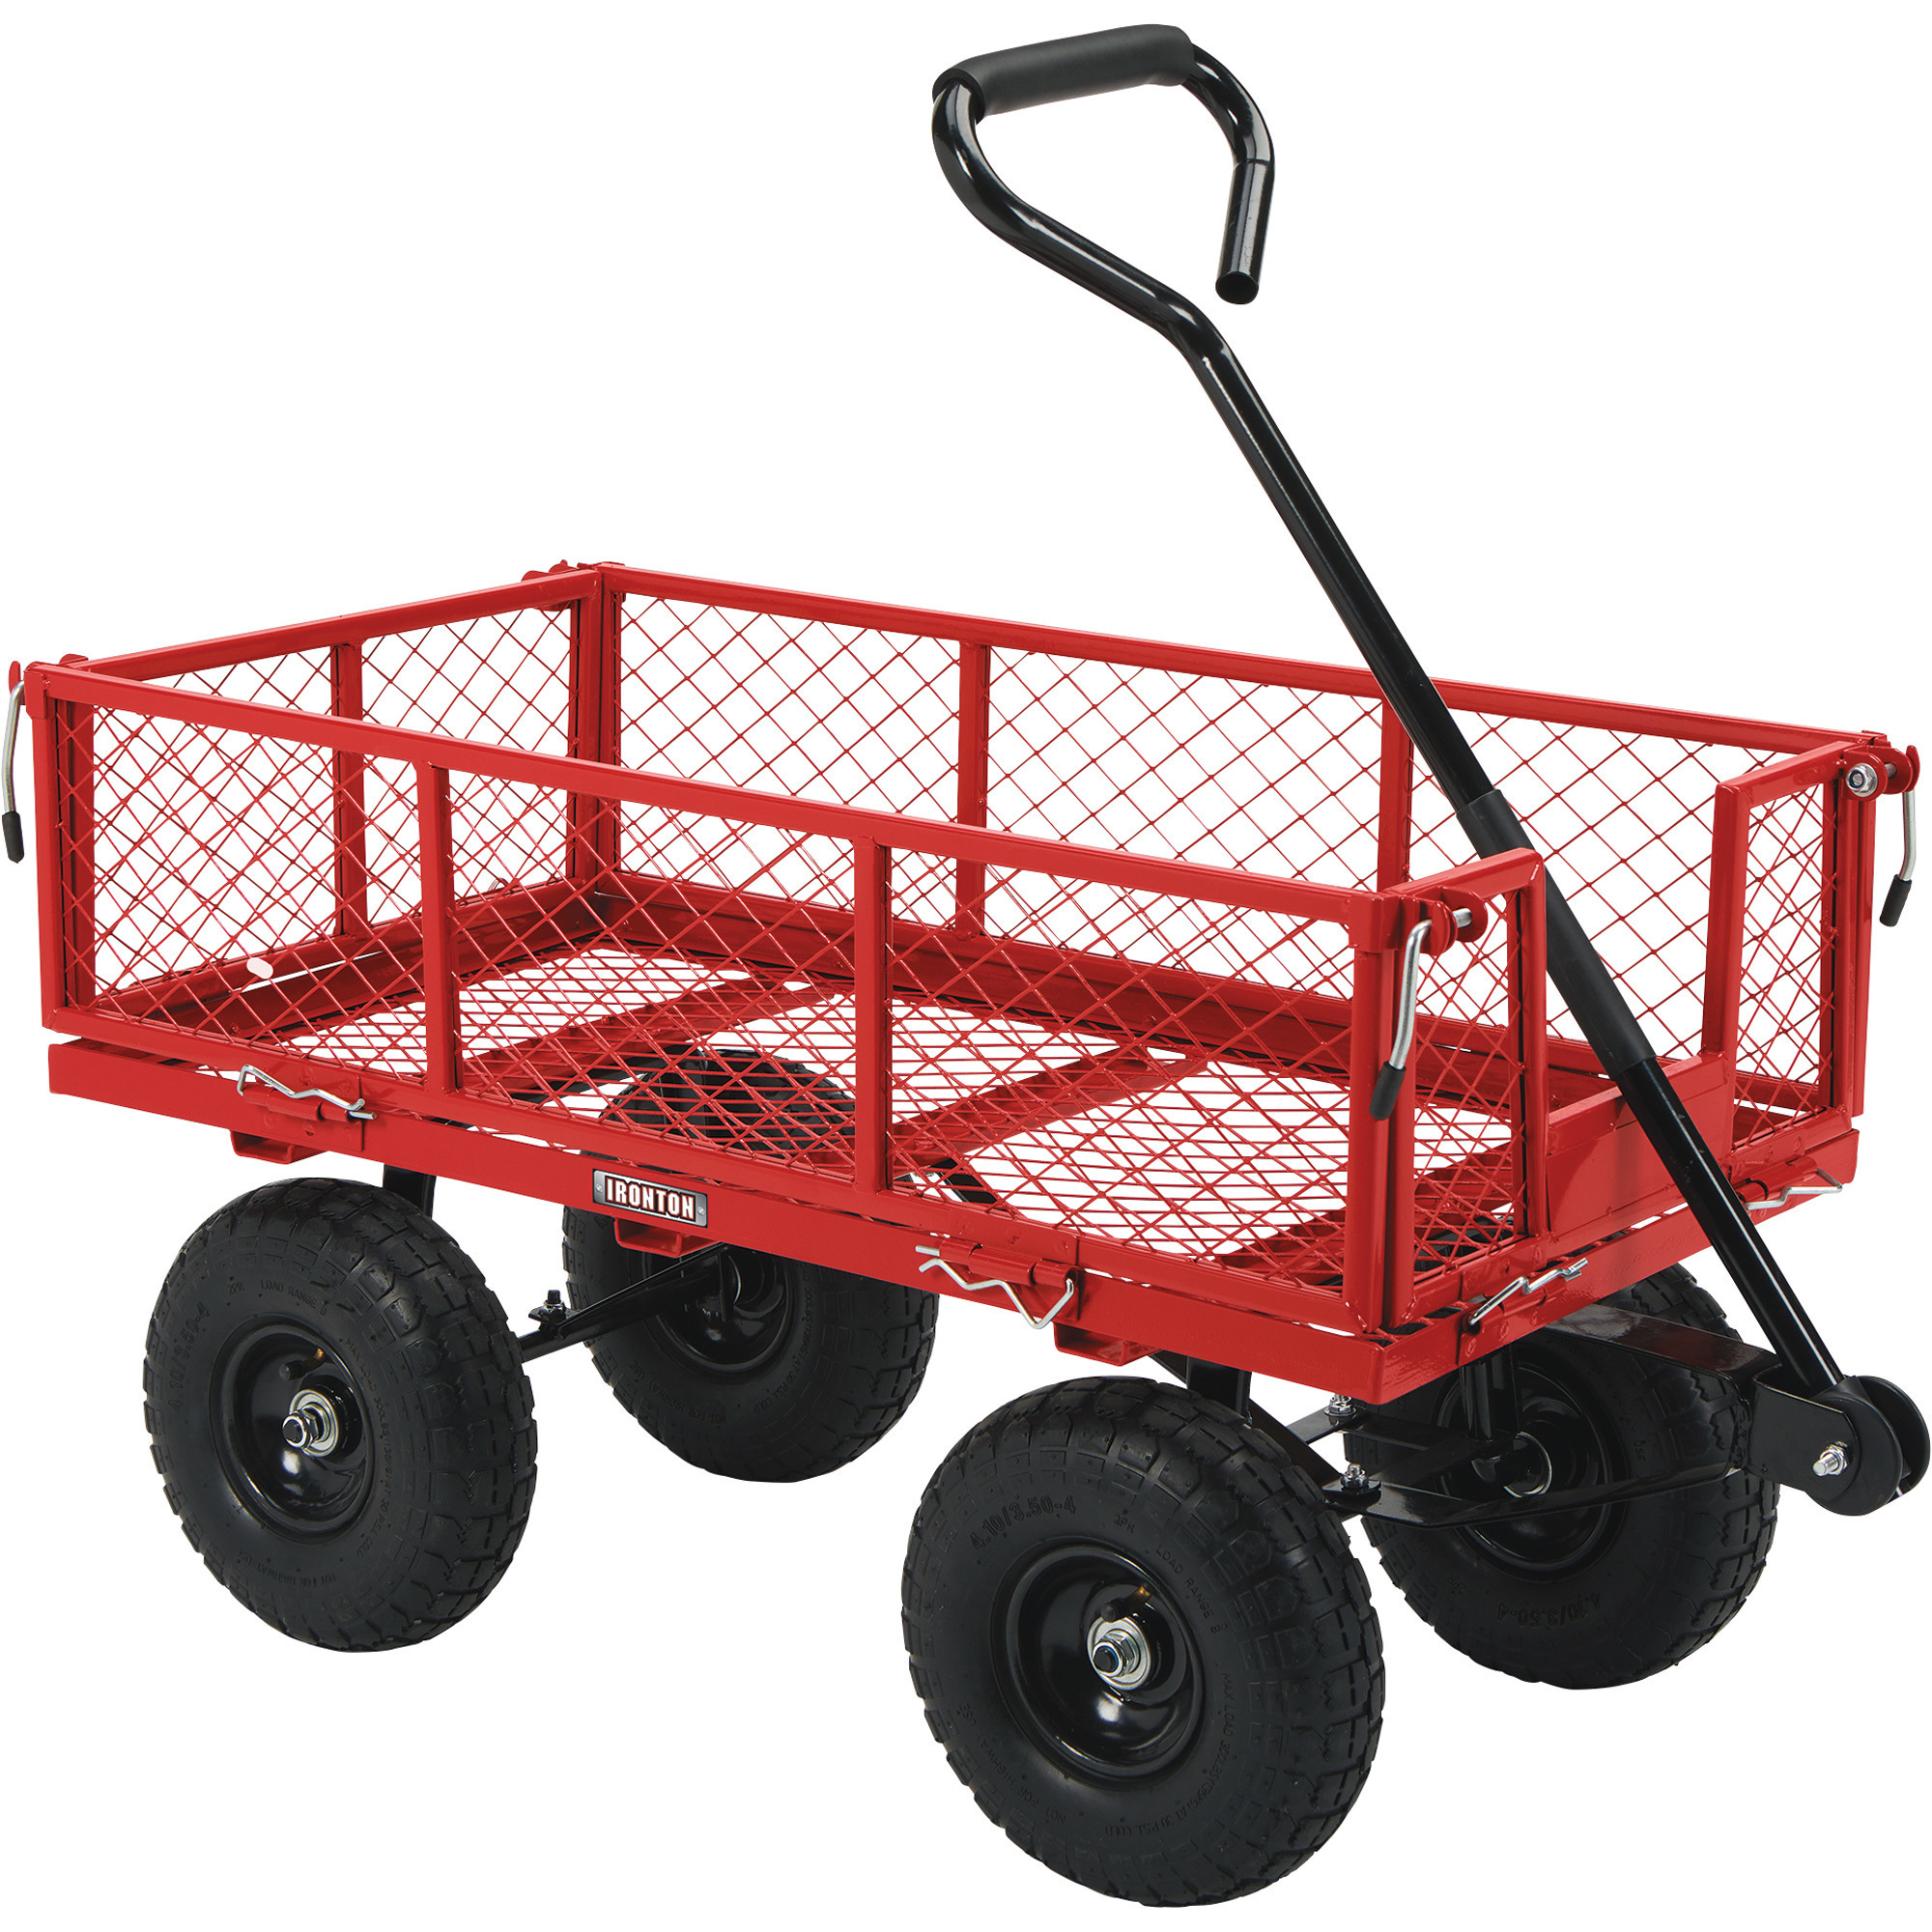 Ironton Steel Garden Cart, 400-Lb. Capacity, 38Inch L x 18 1/2Inch W x 21Inch H